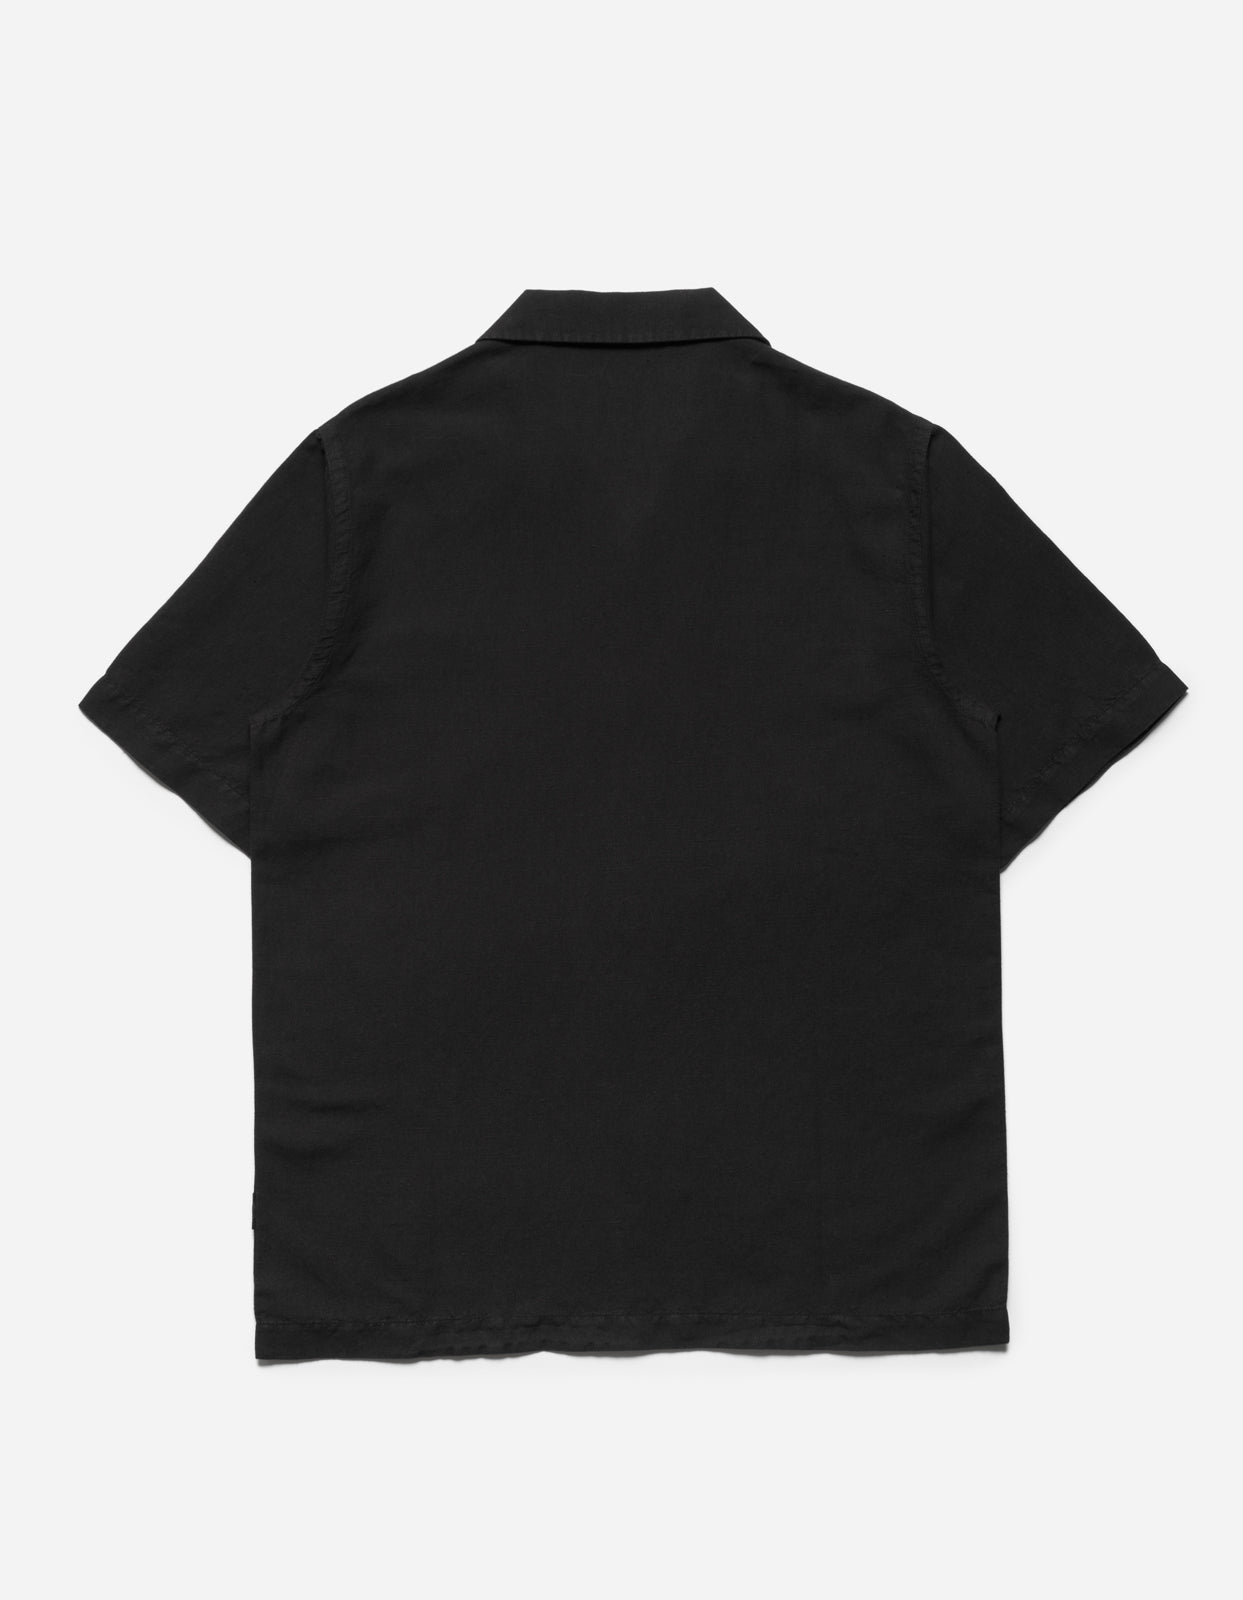 5078 Dragon Bamboo Hemp Shirt Black